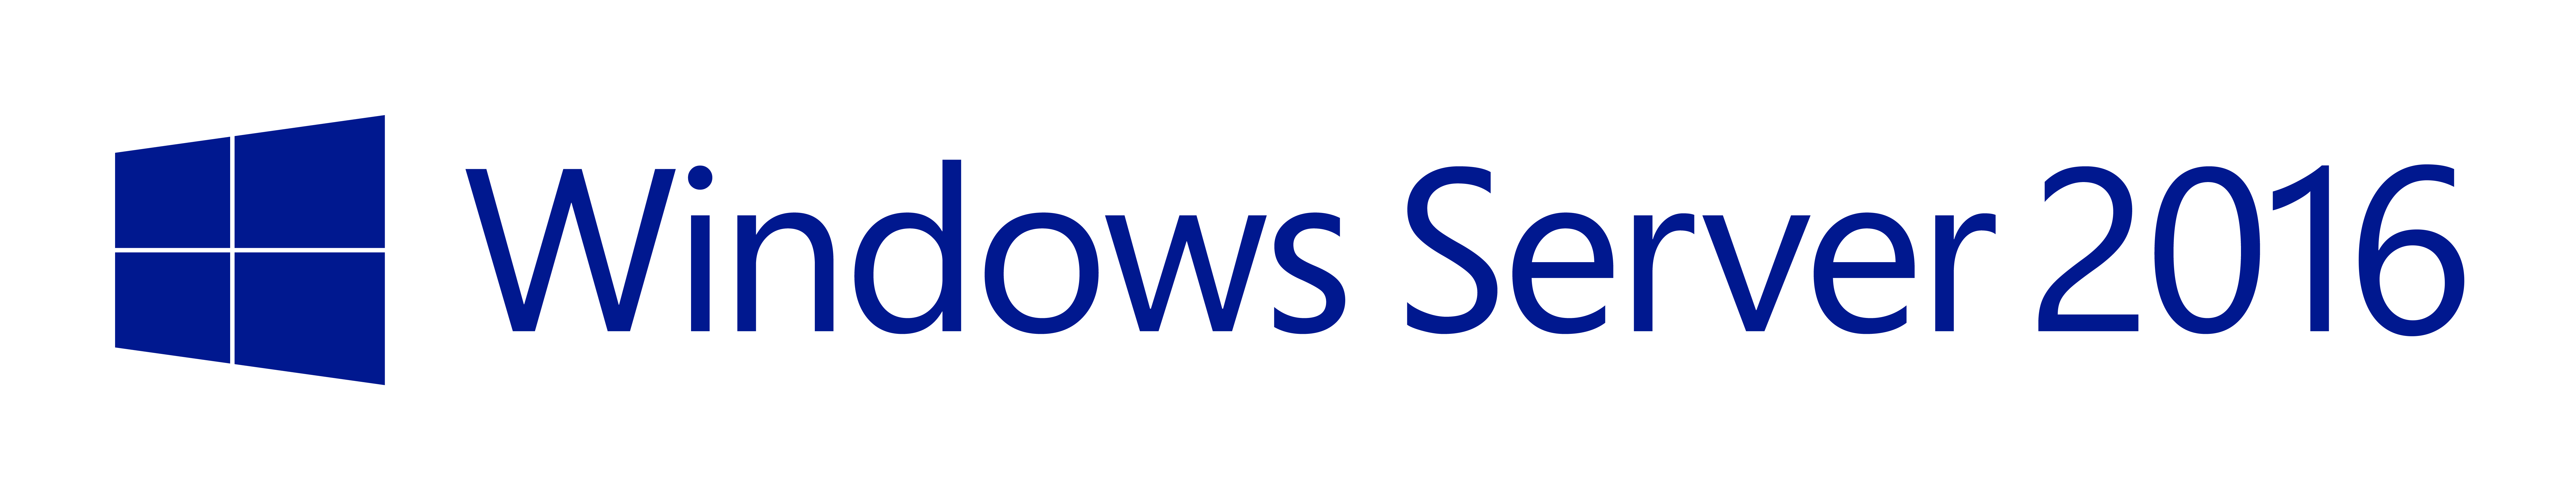 Windows Server 2016 Logo - File:Windows-server-2016.png - Wikimedia Commons